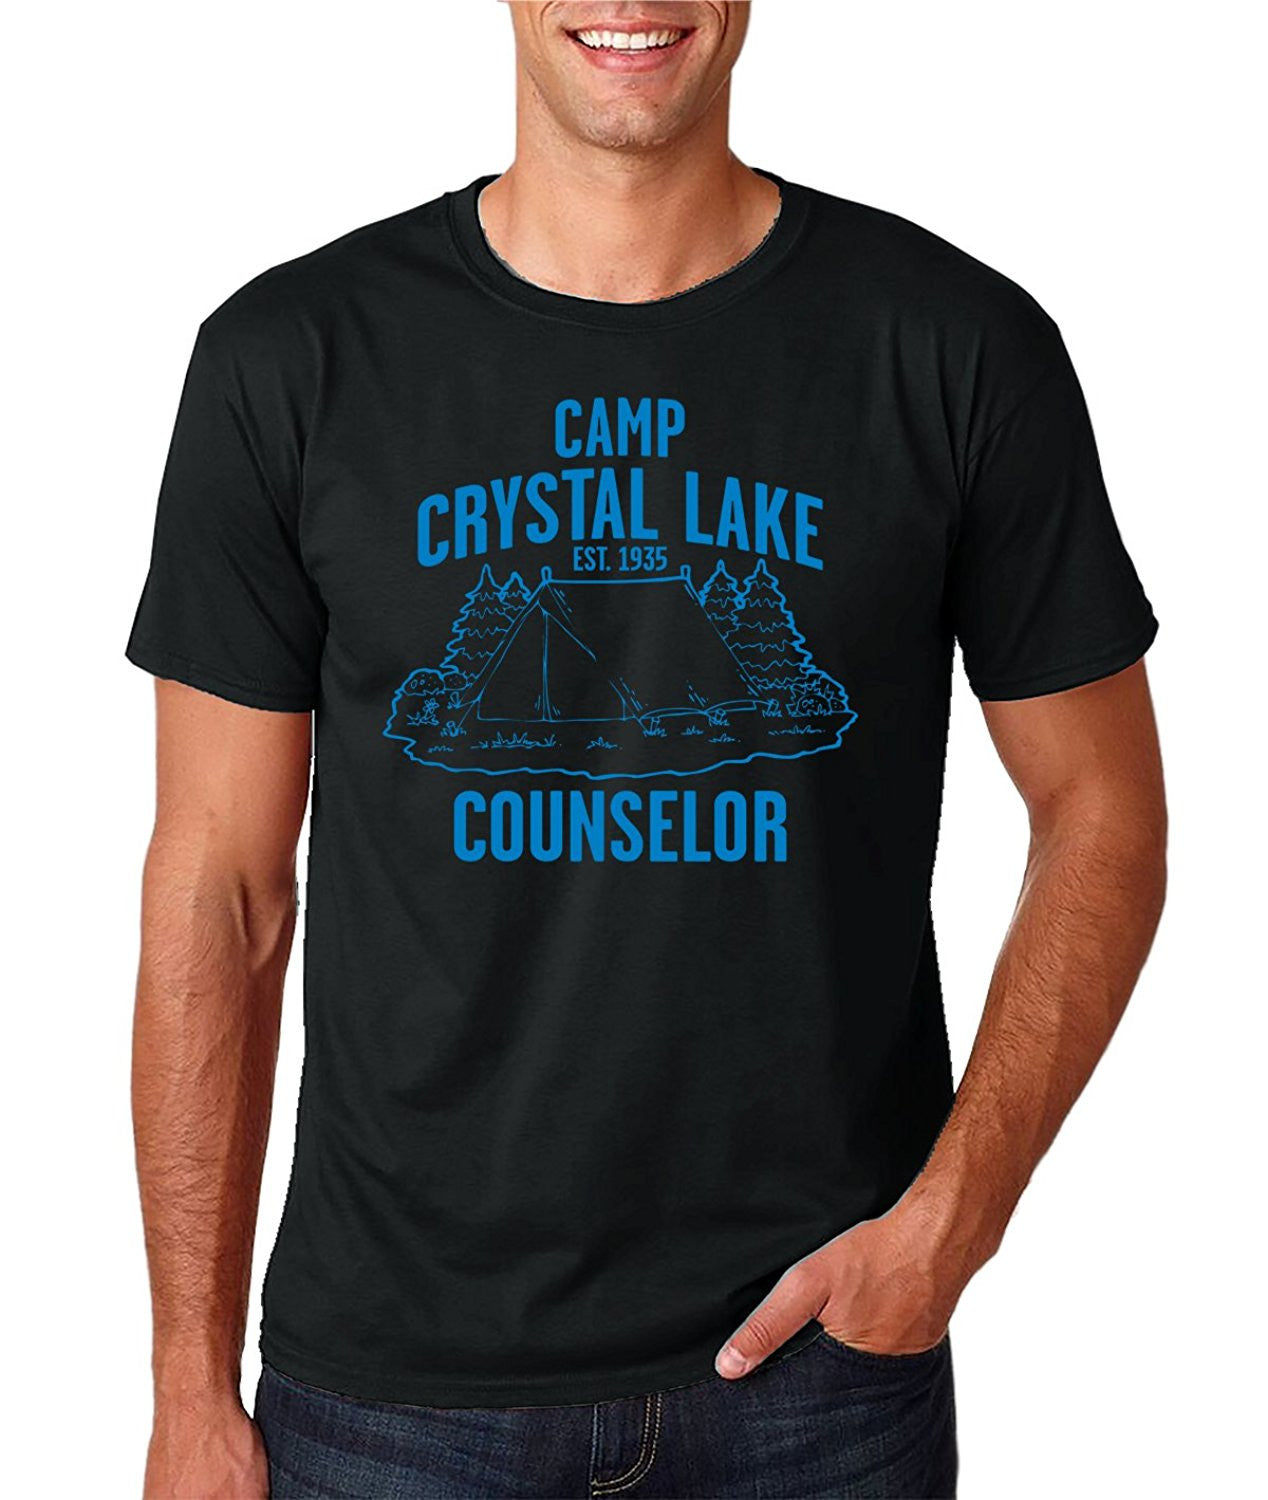 Camp Crystal Lake Counselor T Shirt